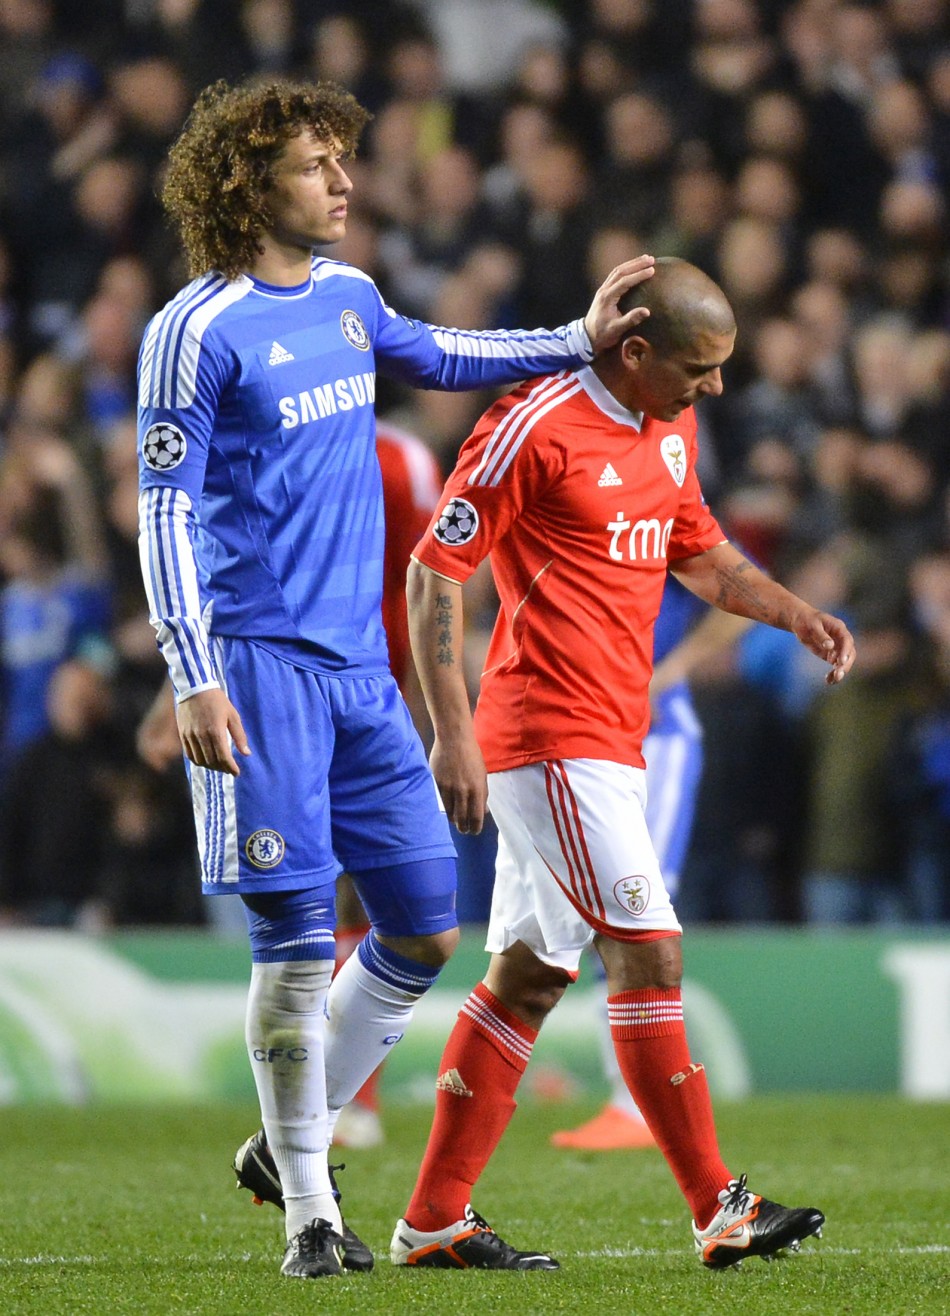 Soccer - Chelsea v Benfica - Champions League - Second Leg - Quarter Finals -  Stamford Bridge